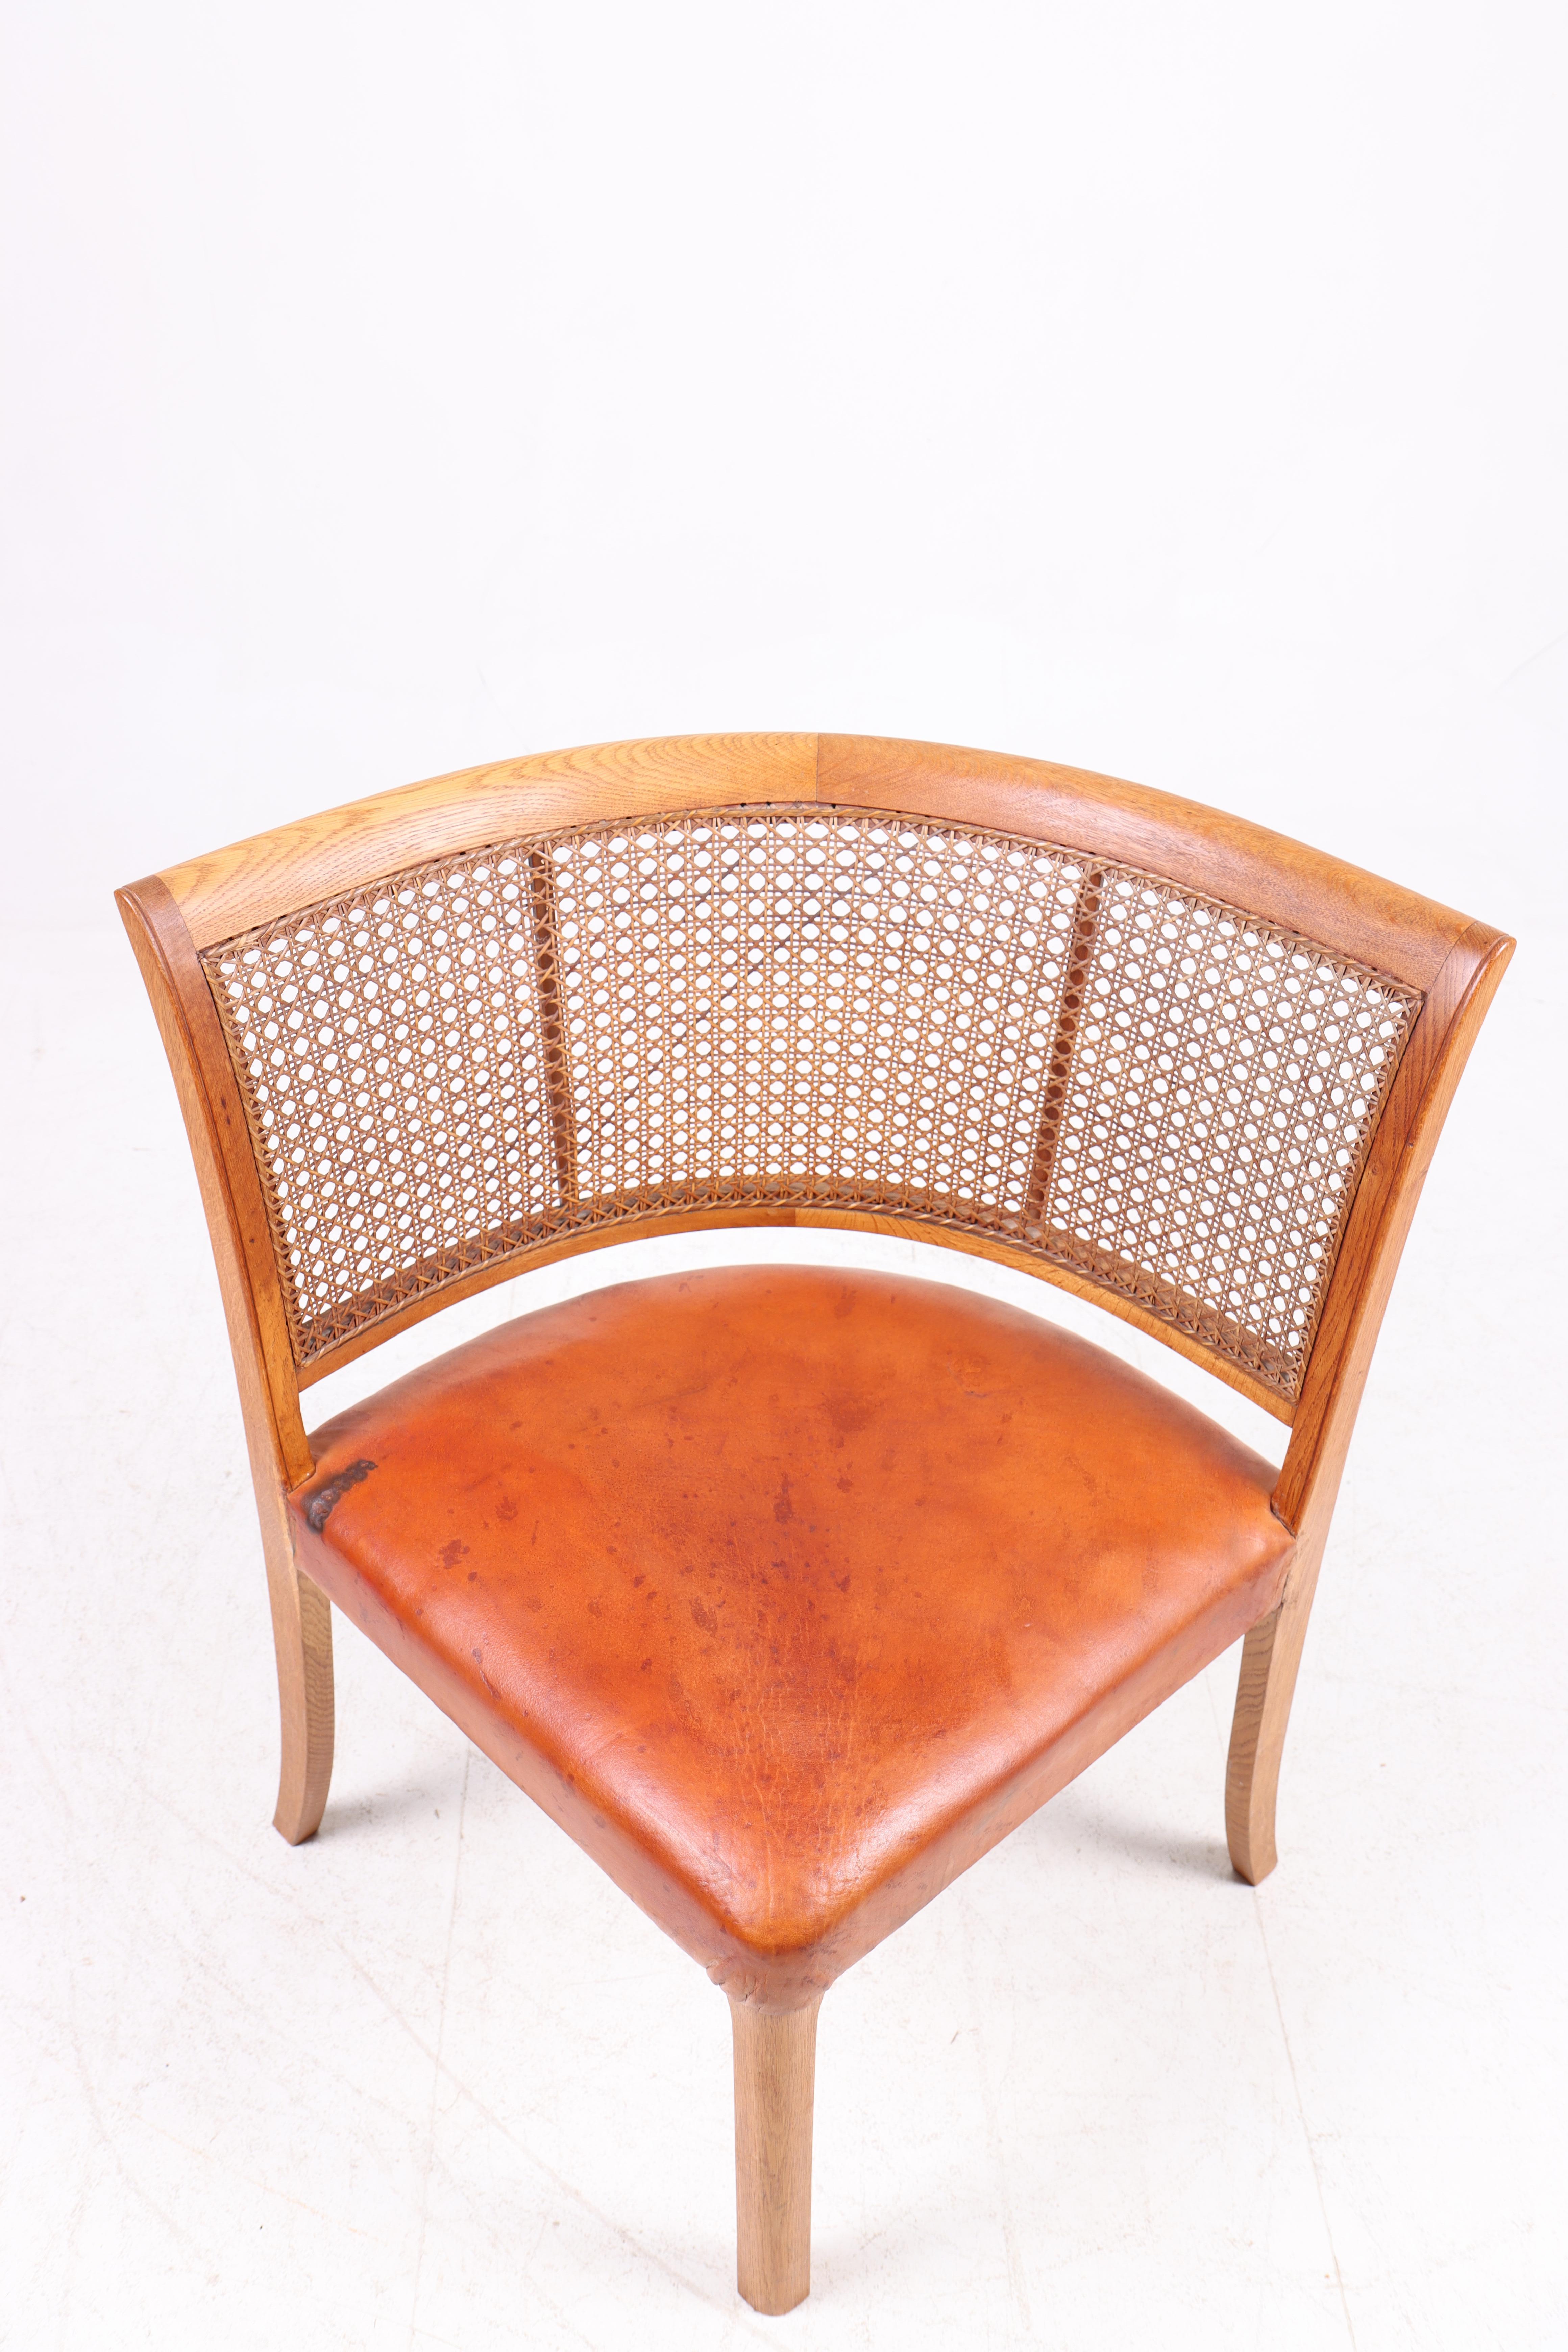 Scandinavian Modern Danish Side Chair in Oak and Cognac Leather, 1940s For Sale